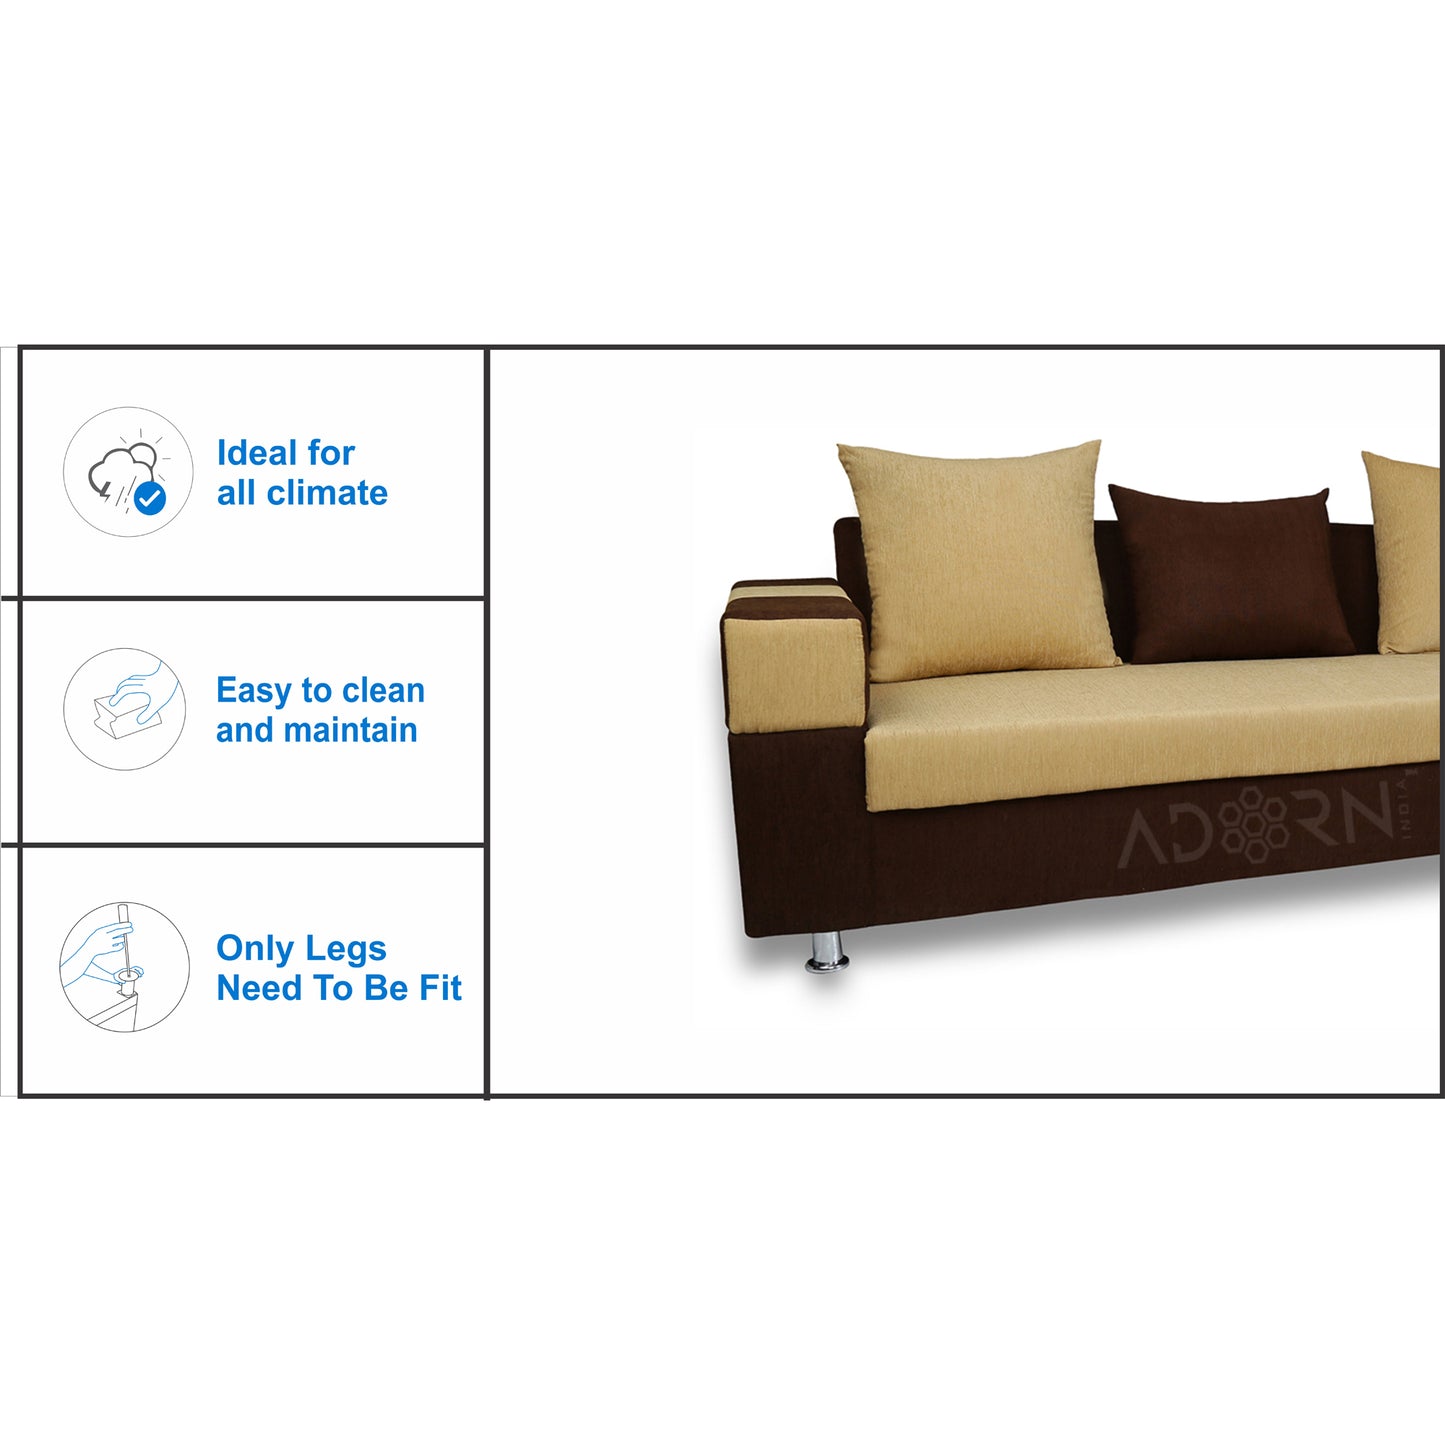 Adorn India Adillac 6 Seater Corner Sofa(Right Side)(Brown & Beige)